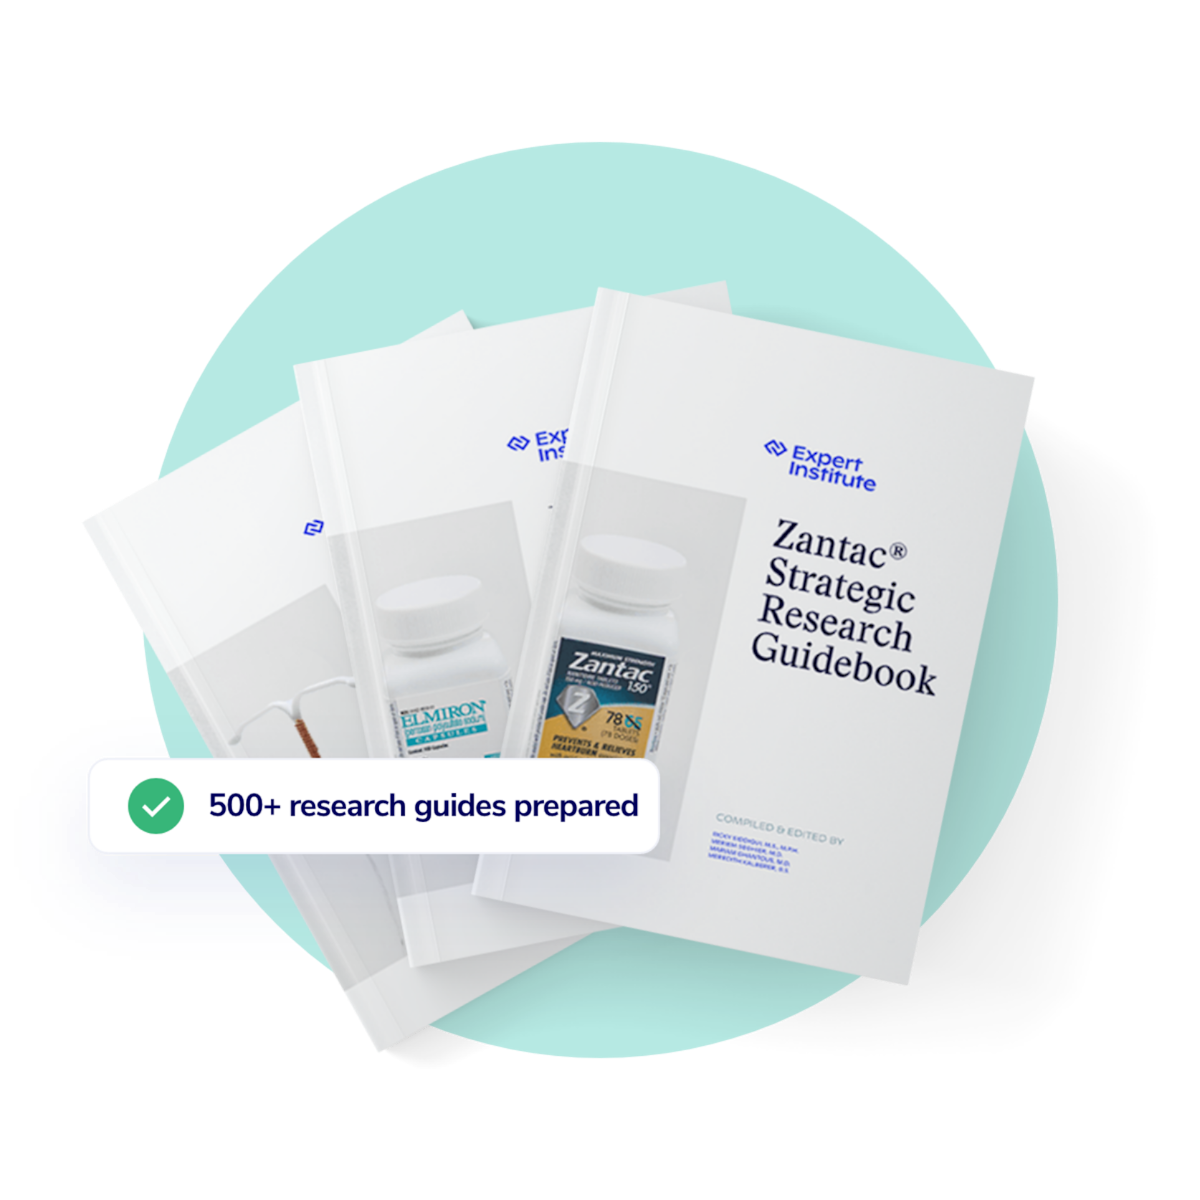 500+ research guides prepared